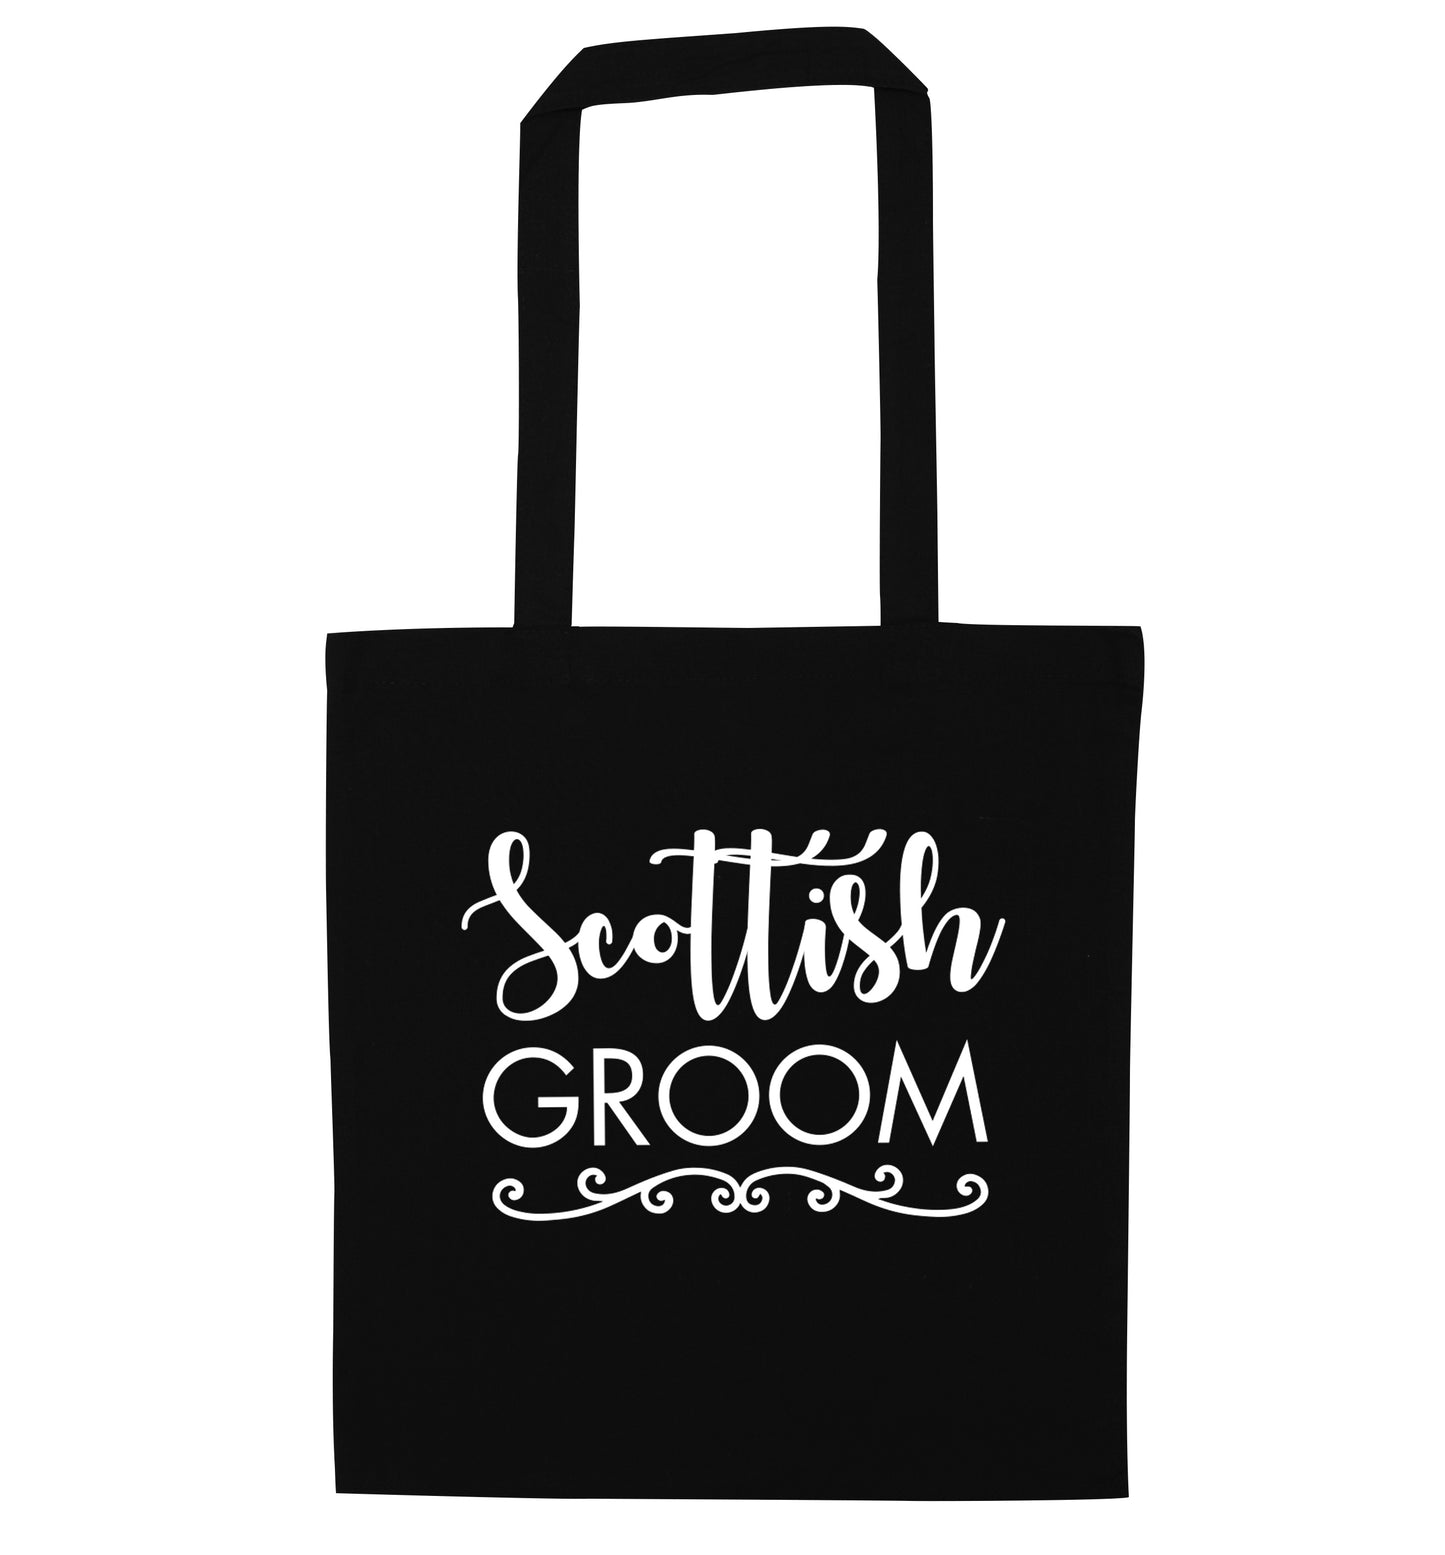 Scottish groom black tote bag